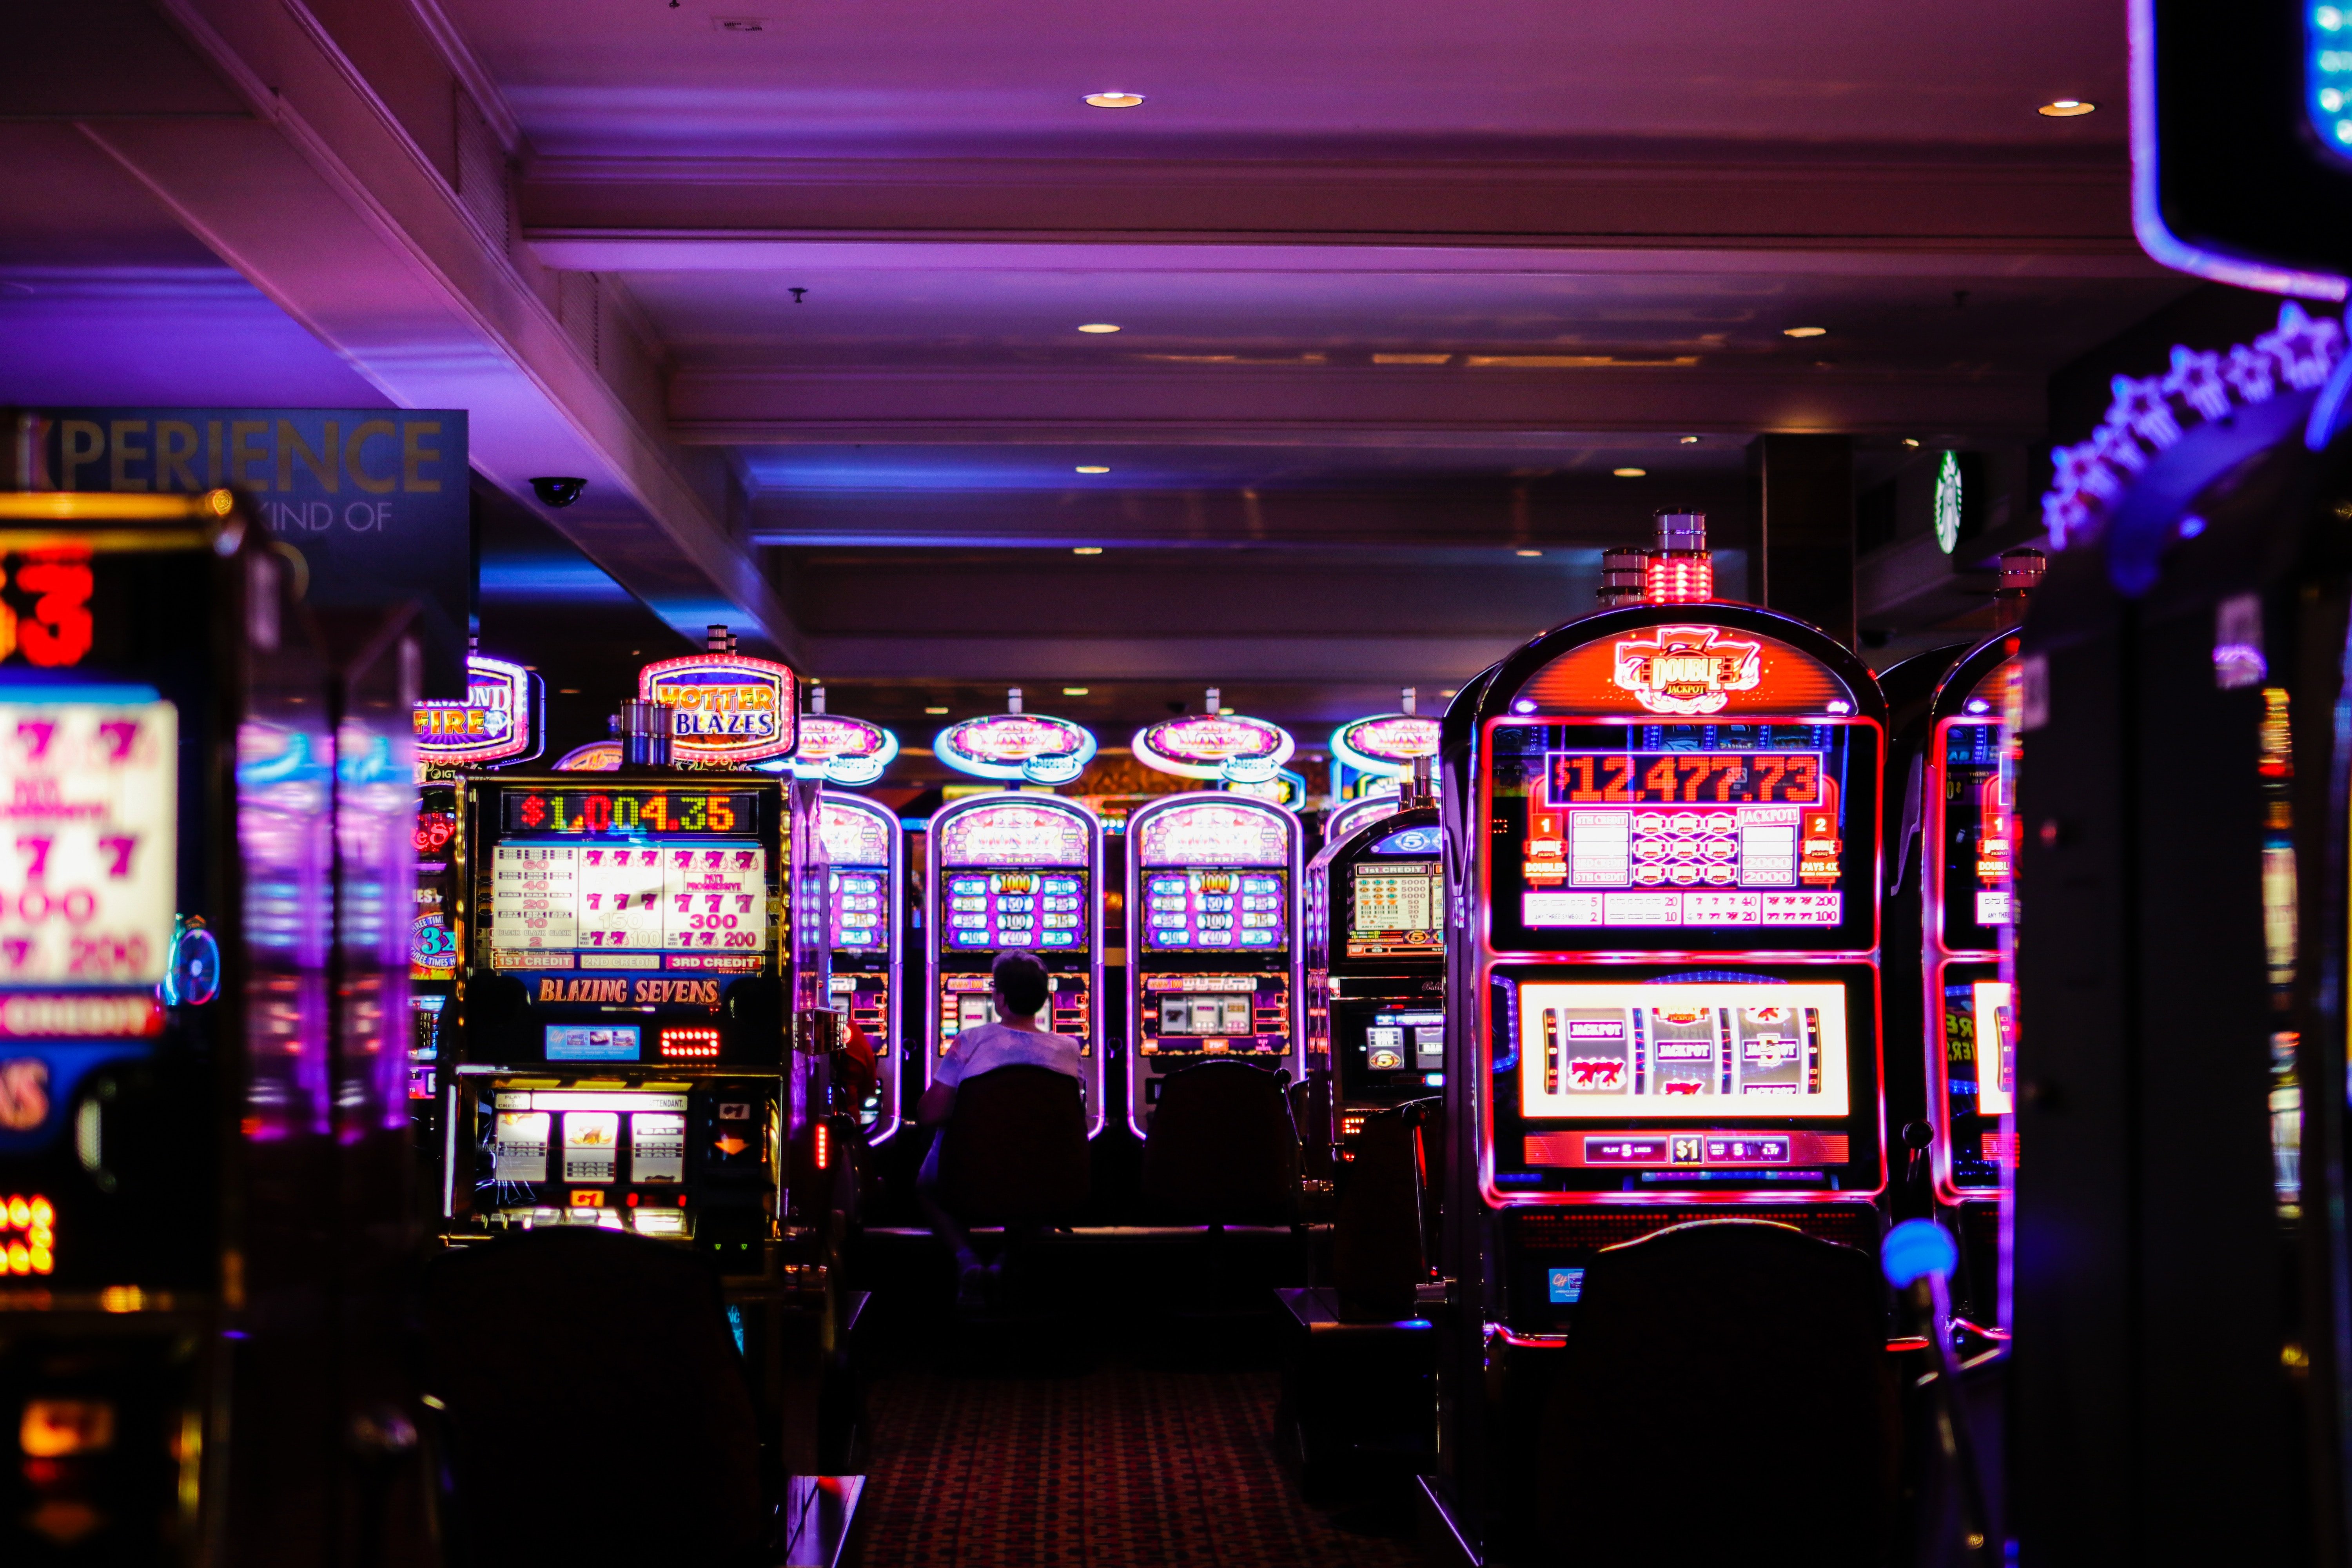 Casino slot machine images